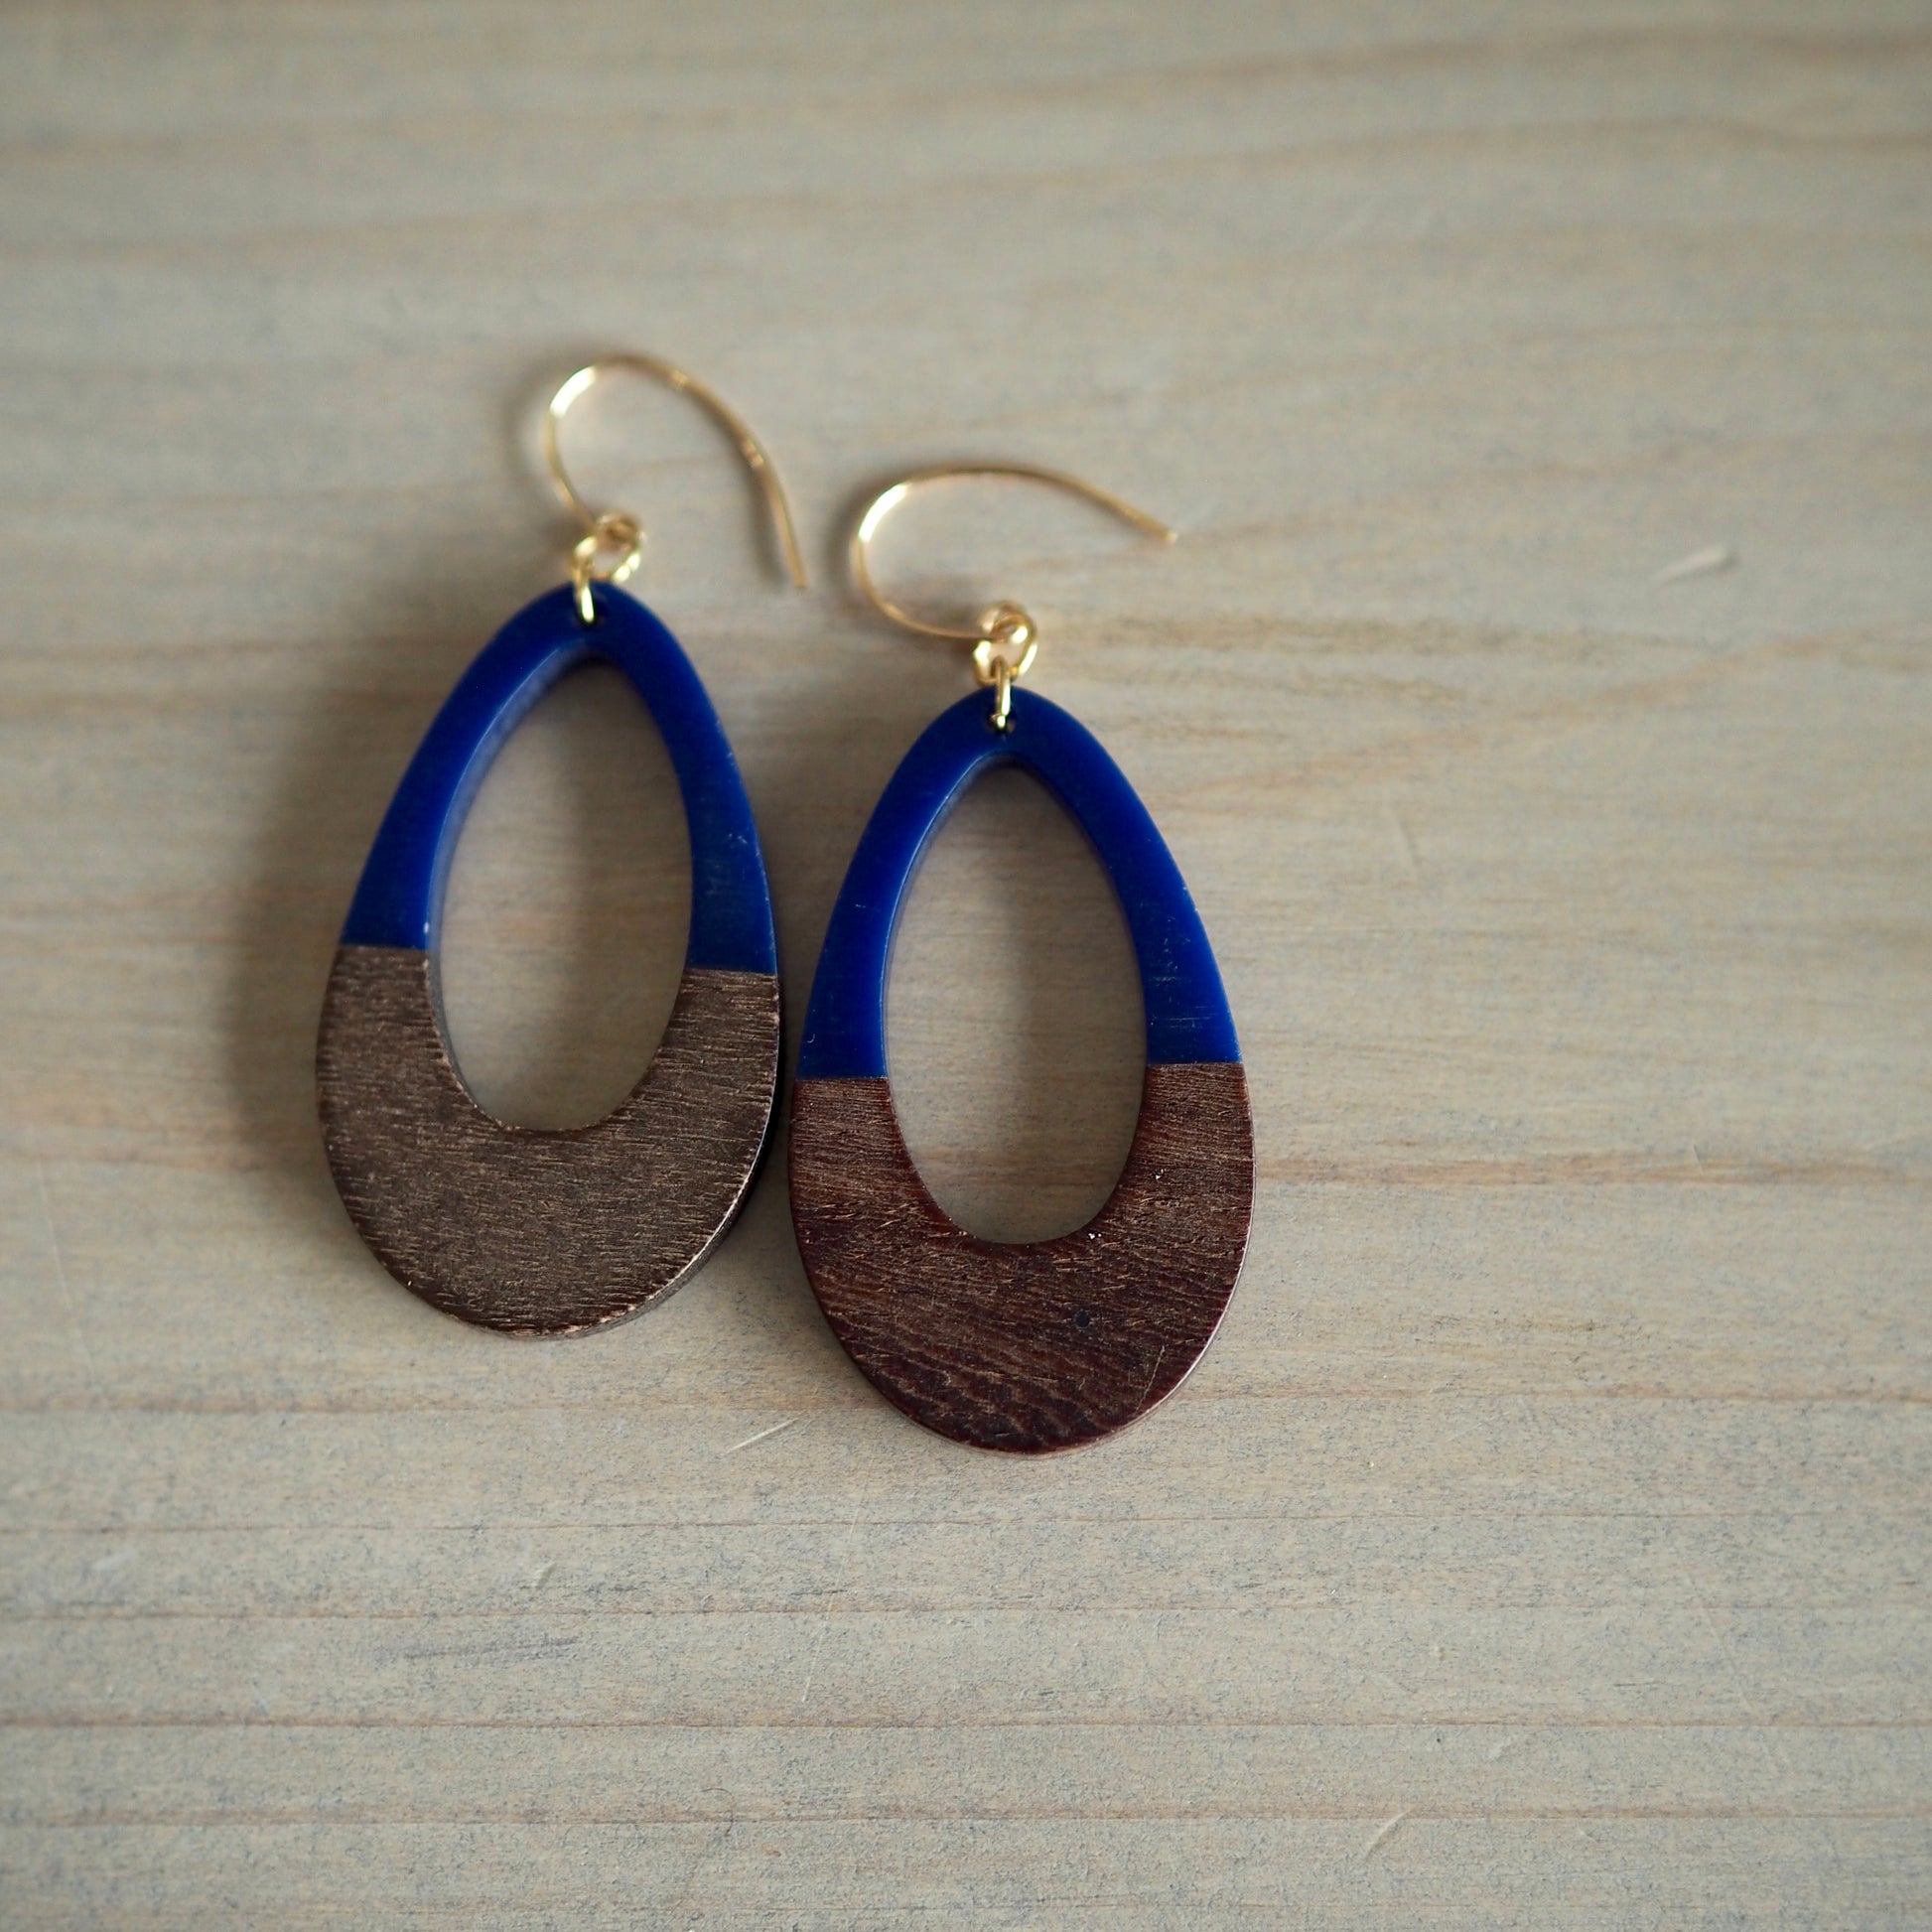 Wood and resin earrings with Navy Blue by Nancy Wallis Designs